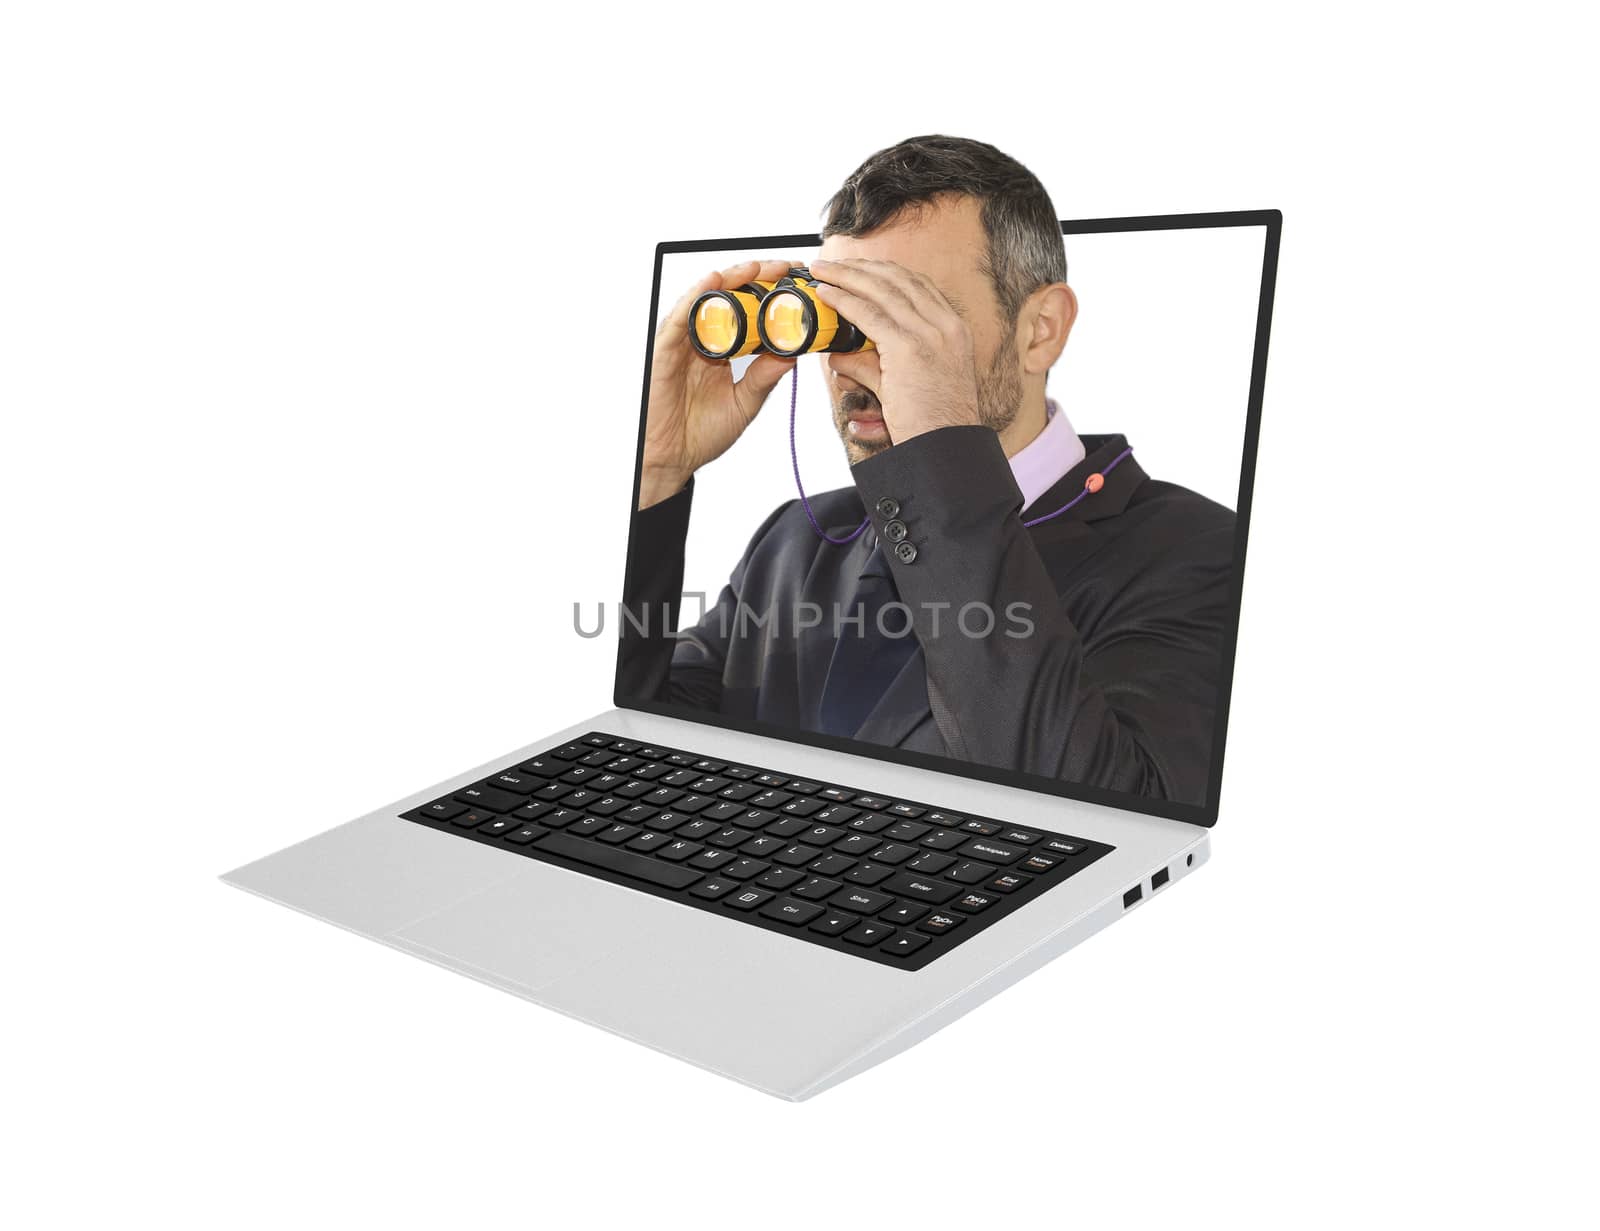 Online economic forecast concept. Man in suit holding binoculars inside a laptop.